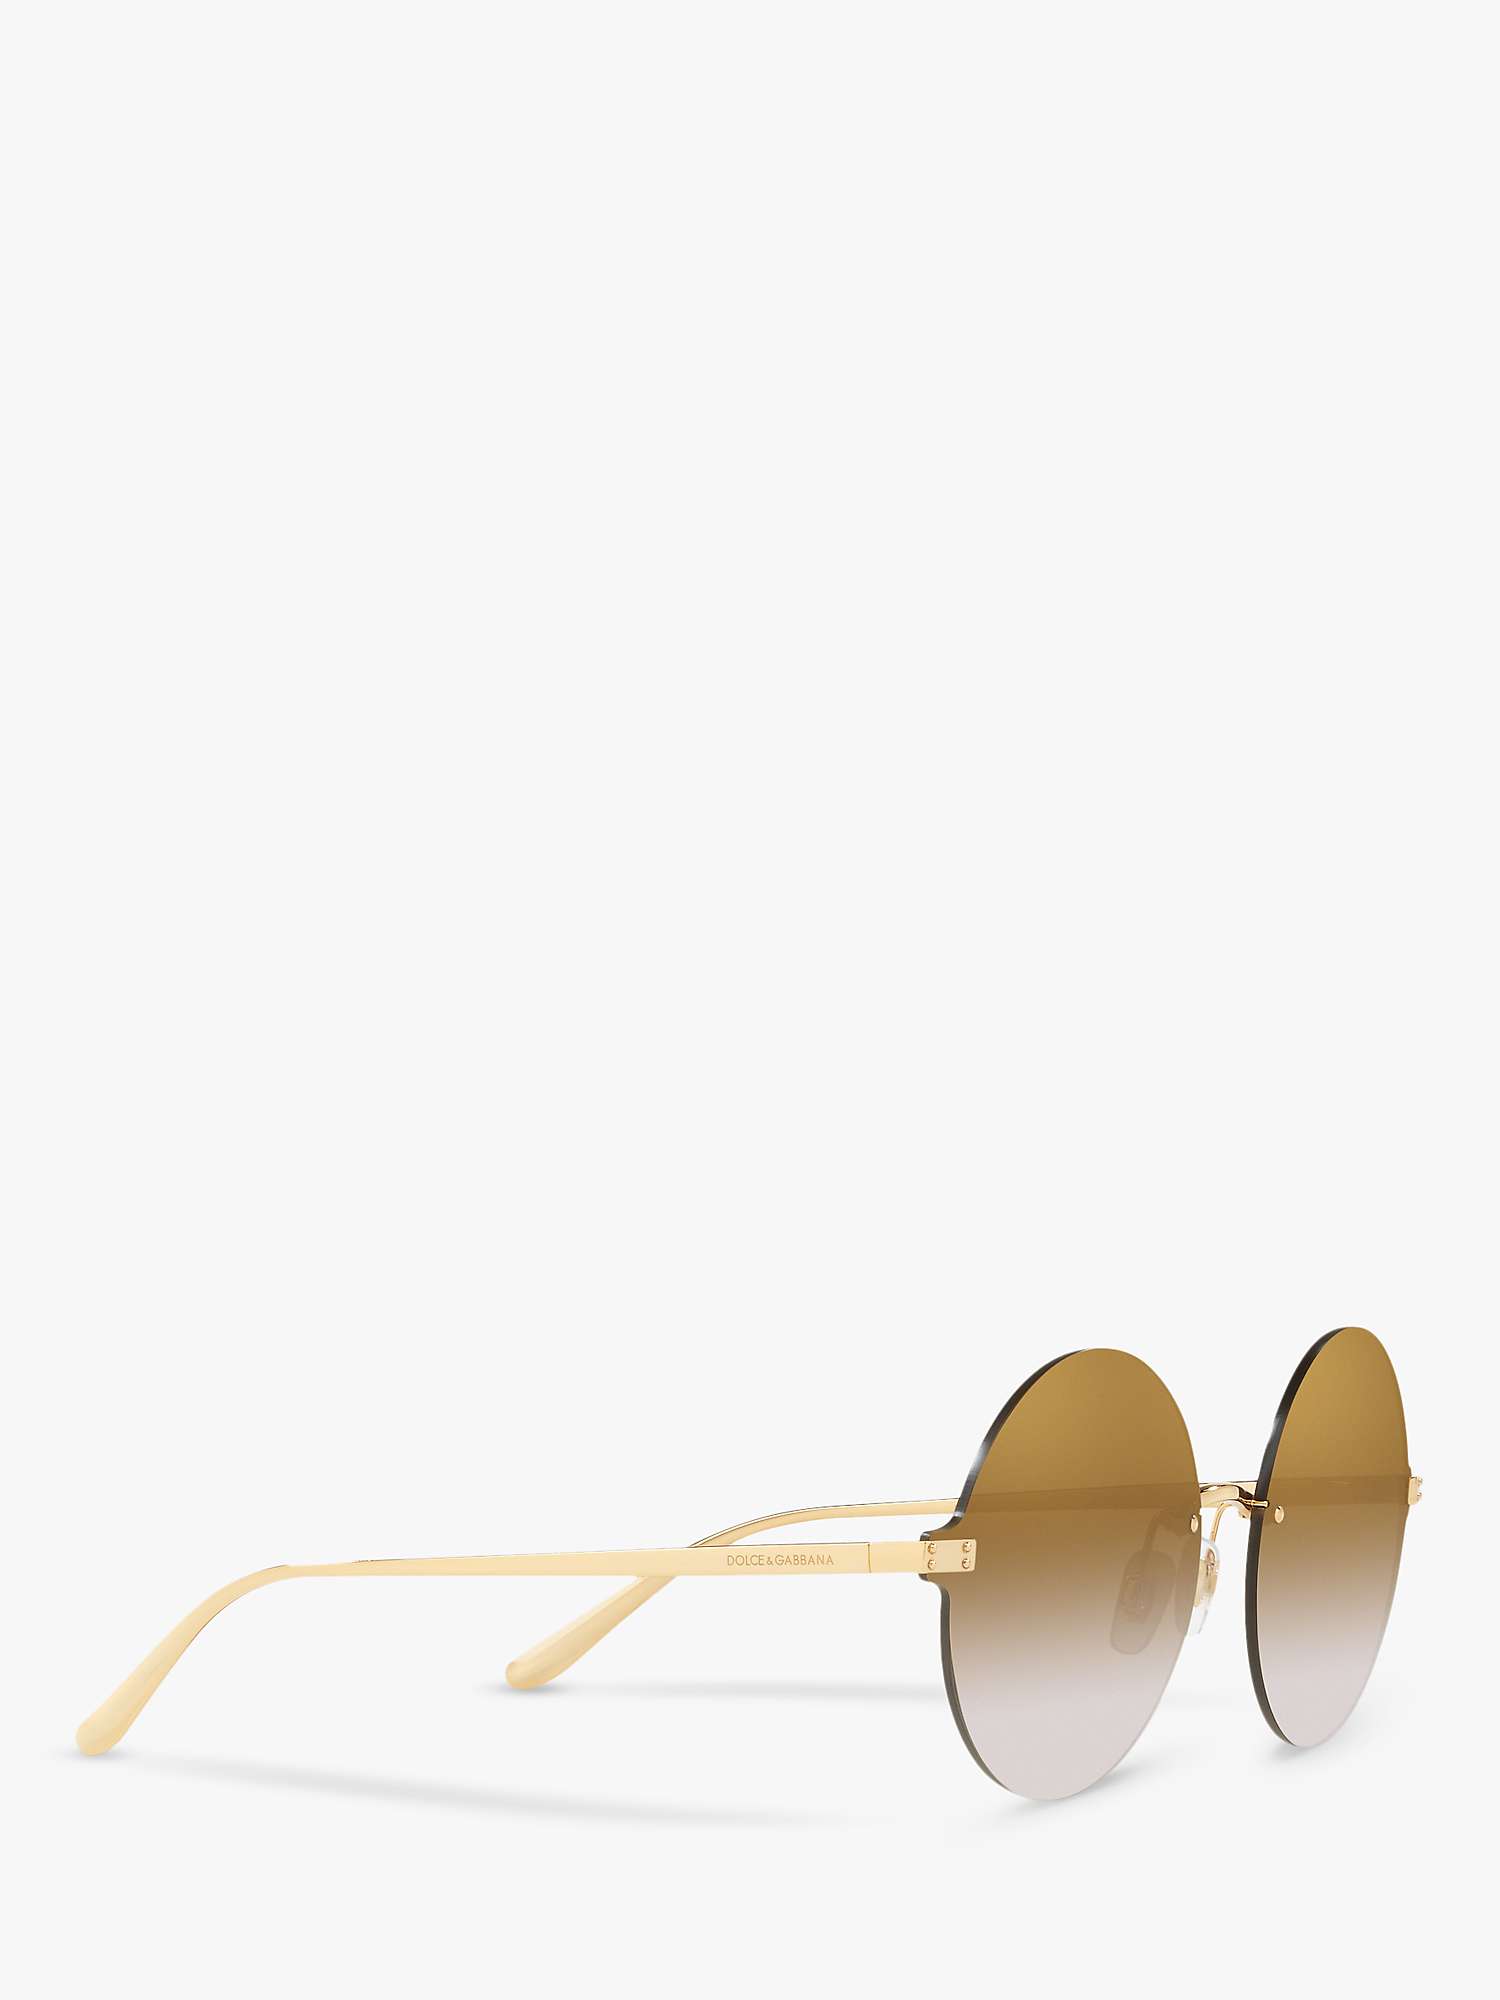 Buy Dolce & Gabbana DG2228 Women's Round Sunglasses, Gold/Mirrored Gold Gradient Online at johnlewis.com